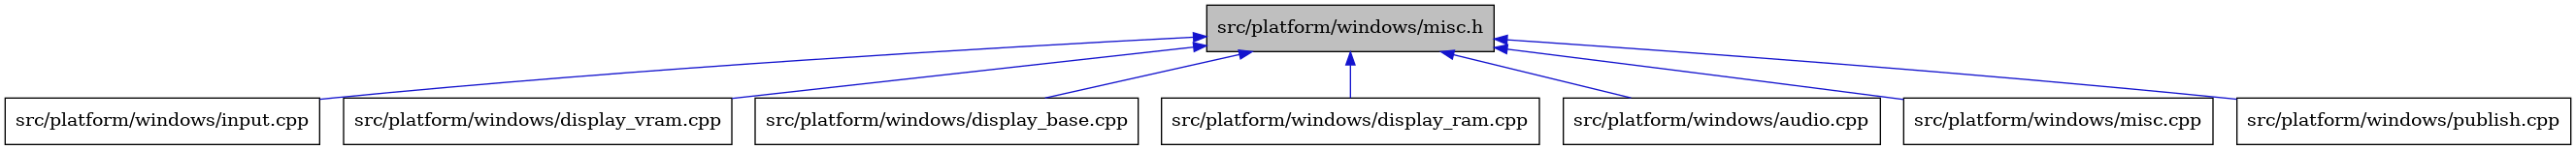 digraph {
    graph [bgcolor="#00000000"]
    node [shape=rectangle style=filled fillcolor="#FFFFFF" font=Helvetica padding=2]
    edge [color="#1414CE"]
    "5" [label="src/platform/windows/input.cpp" tooltip="src/platform/windows/input.cpp"]
    "6" [label="src/platform/windows/display_vram.cpp" tooltip="src/platform/windows/display_vram.cpp"]
    "4" [label="src/platform/windows/display_base.cpp" tooltip="src/platform/windows/display_base.cpp"]
    "3" [label="src/platform/windows/display_ram.cpp" tooltip="src/platform/windows/display_ram.cpp"]
    "2" [label="src/platform/windows/audio.cpp" tooltip="src/platform/windows/audio.cpp"]
    "7" [label="src/platform/windows/misc.cpp" tooltip="src/platform/windows/misc.cpp"]
    "1" [label="src/platform/windows/misc.h" tooltip="src/platform/windows/misc.h" fillcolor="#BFBFBF"]
    "8" [label="src/platform/windows/publish.cpp" tooltip="src/platform/windows/publish.cpp"]
    "1" -> "2" [dir=back tooltip="include"]
    "1" -> "3" [dir=back tooltip="include"]
    "1" -> "4" [dir=back tooltip="include"]
    "1" -> "5" [dir=back tooltip="include"]
    "1" -> "6" [dir=back tooltip="include"]
    "1" -> "7" [dir=back tooltip="include"]
    "1" -> "8" [dir=back tooltip="include"]
}